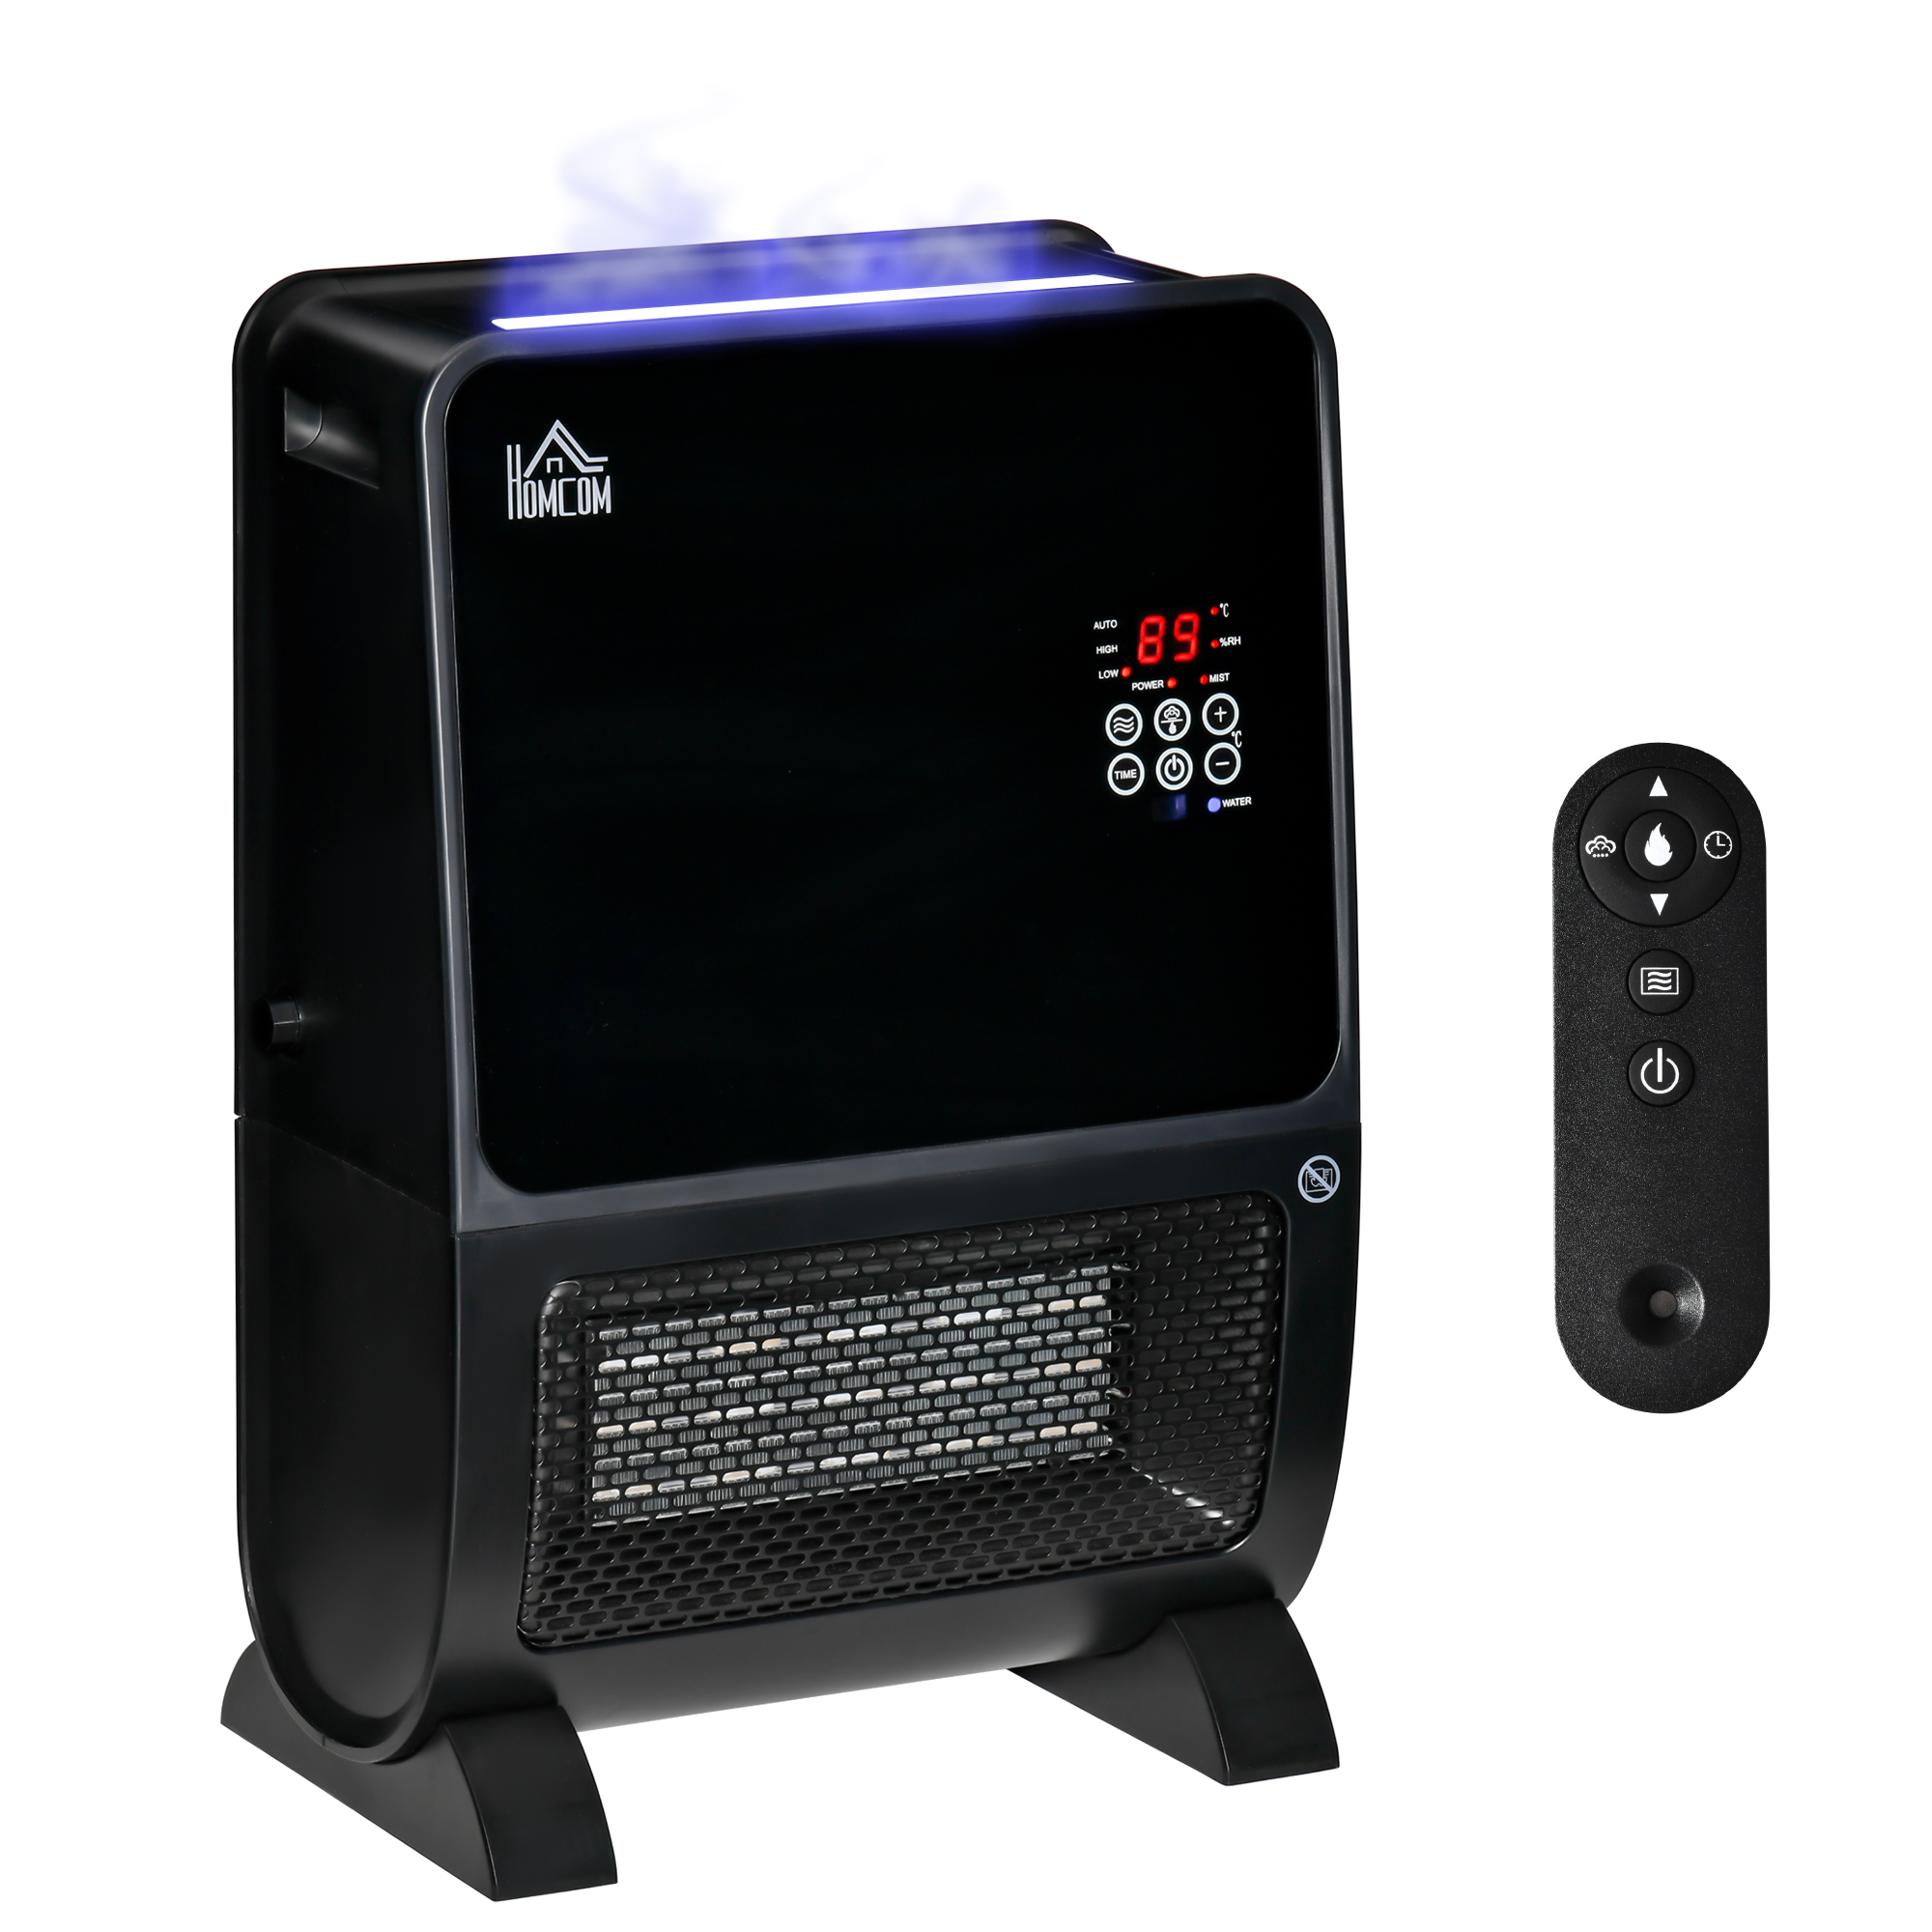 Homcom Calefactor 2000w de ptc humidificador mando a distancia termostato temporizador pantalla y luces led para sala 30 m² 33x21x495 cm negro 820280v90 2000